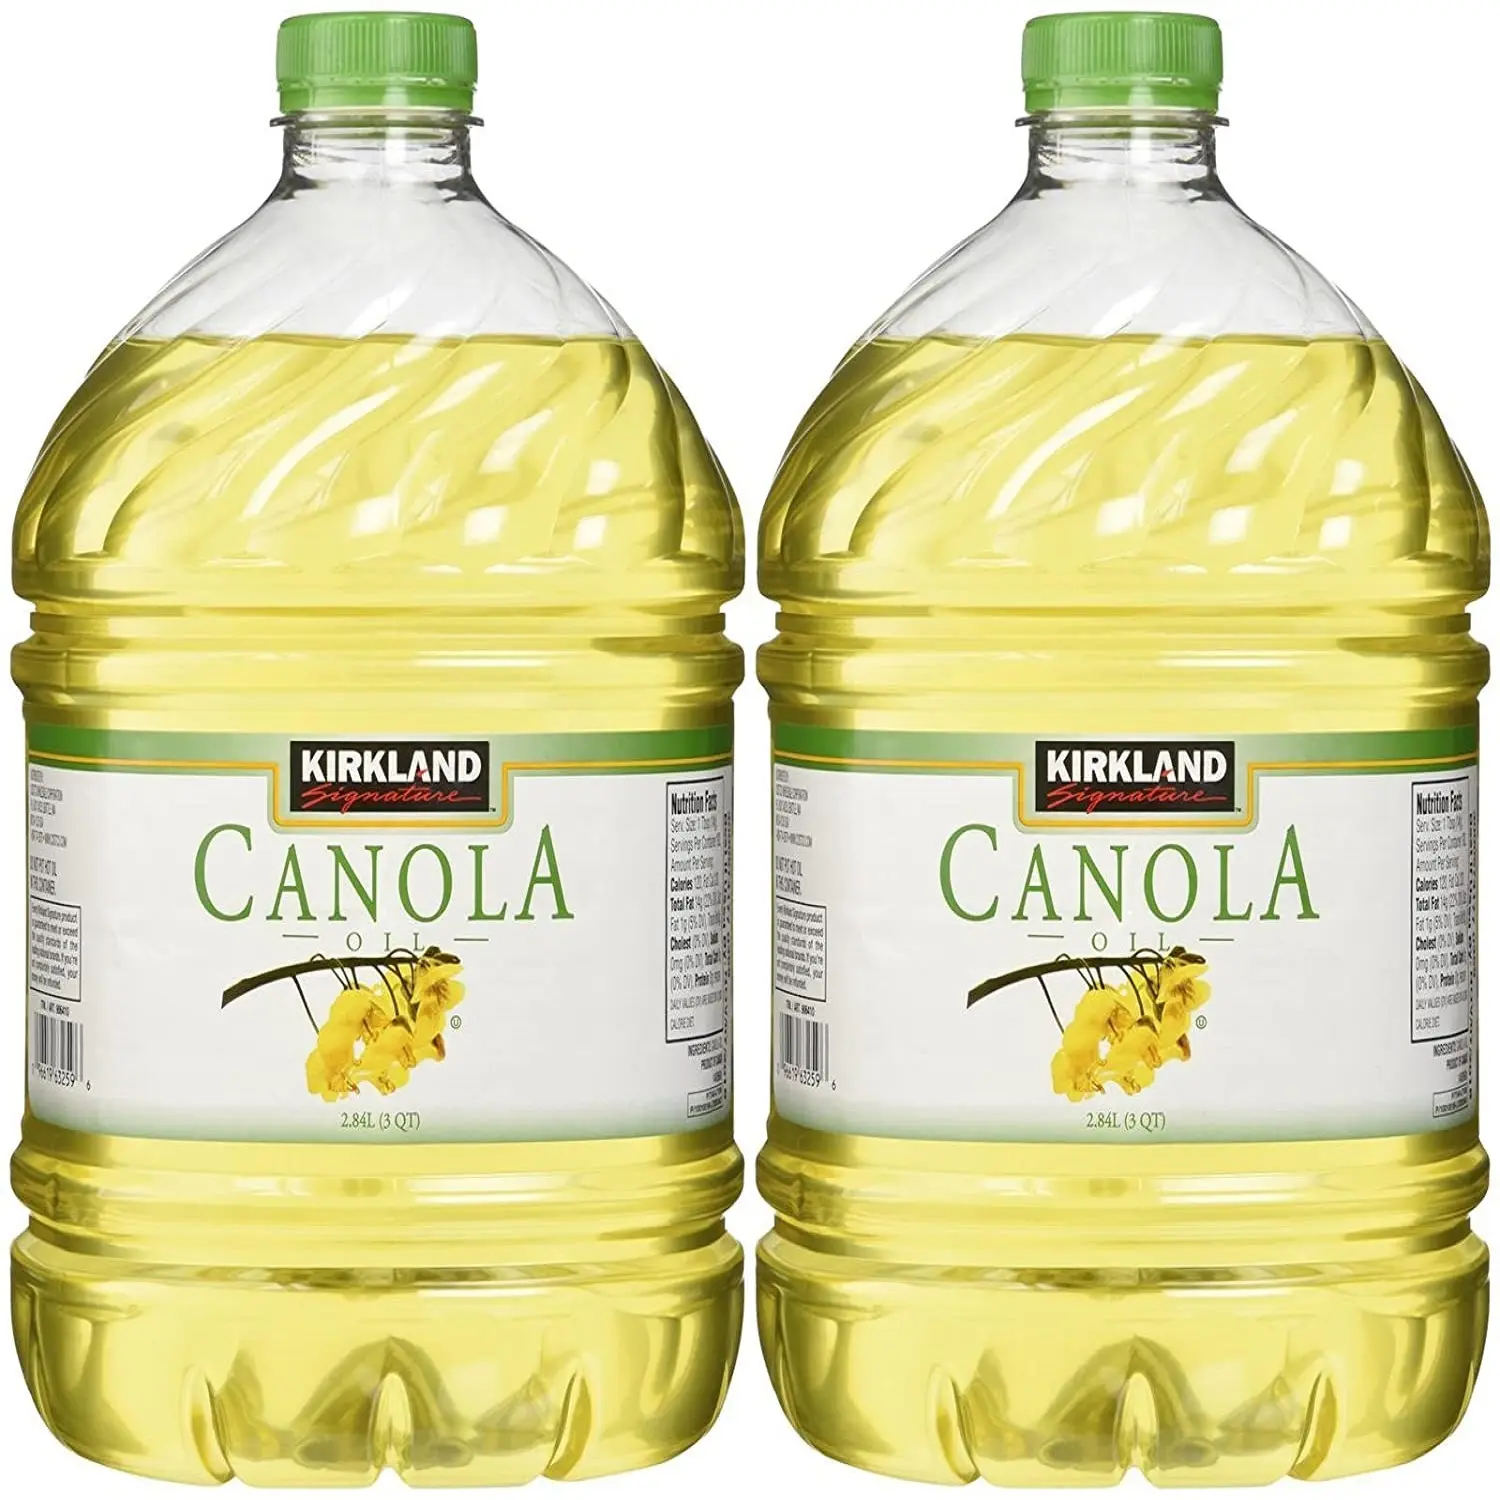 Rapeseed oil Certified Organic 100 % Pure Refined Rapeseed Oil, Canola Oil, Crude degummed oil